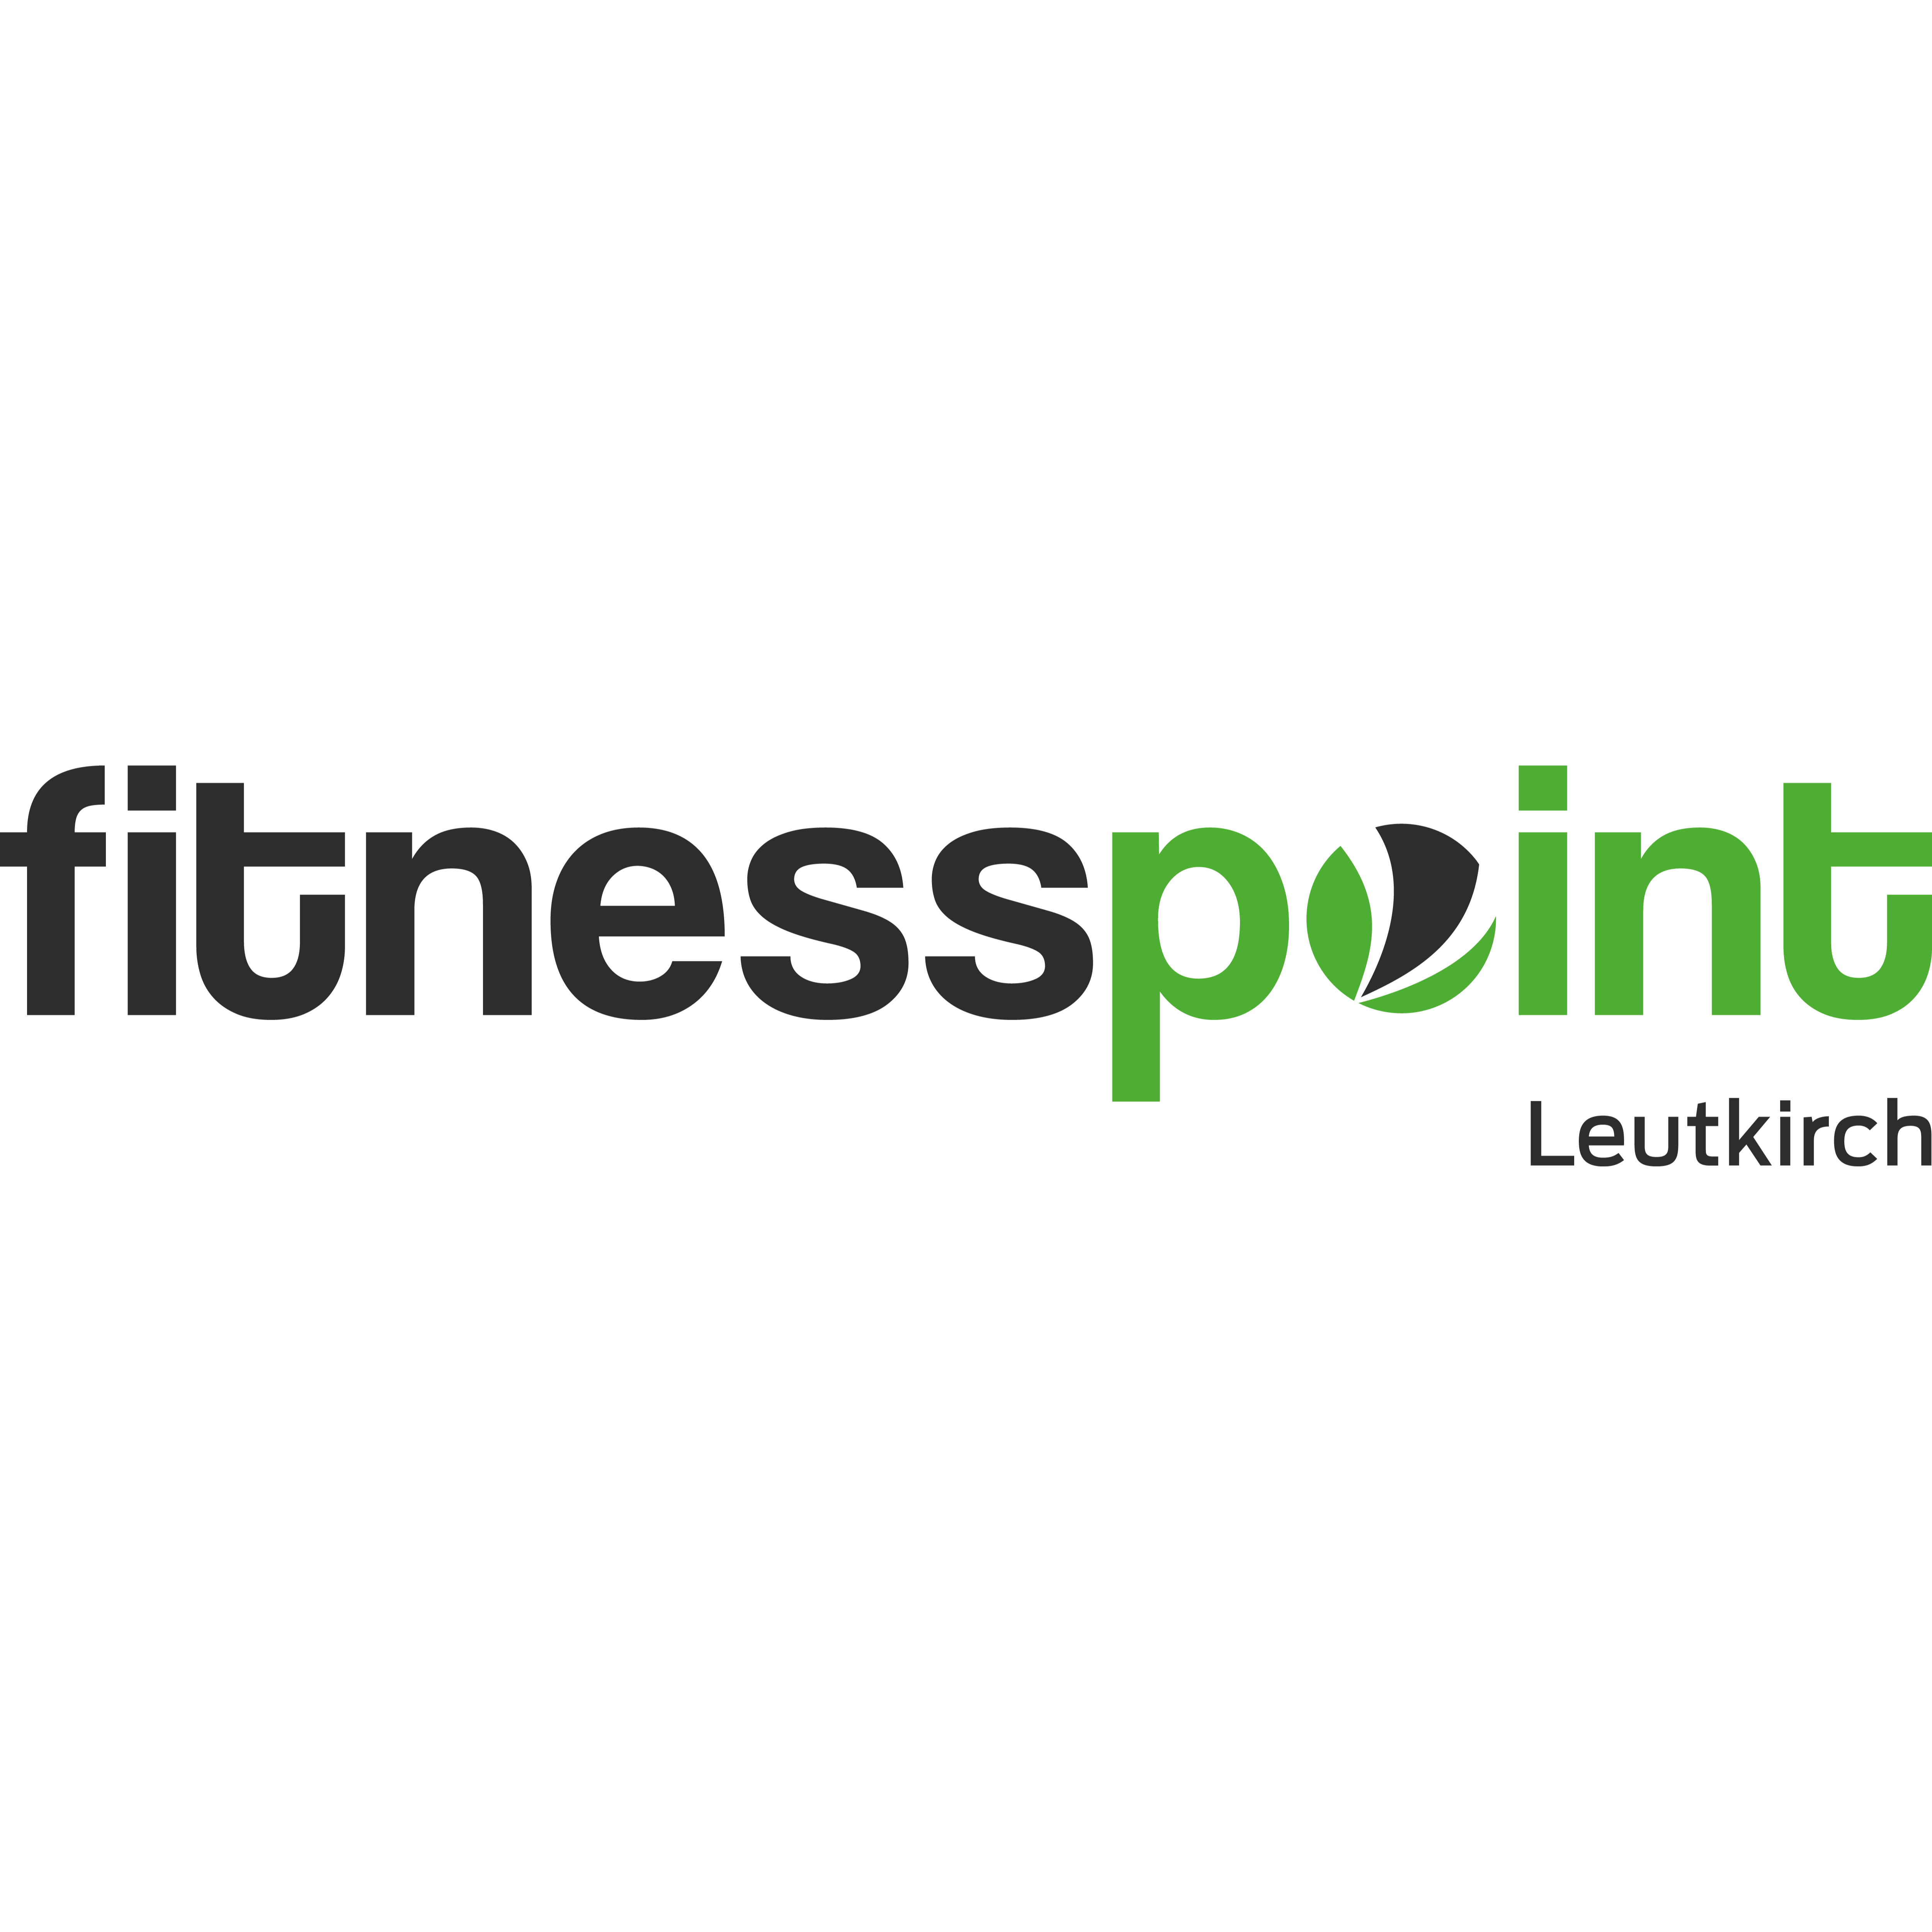 Fitnesspoint Leutkirch Logo